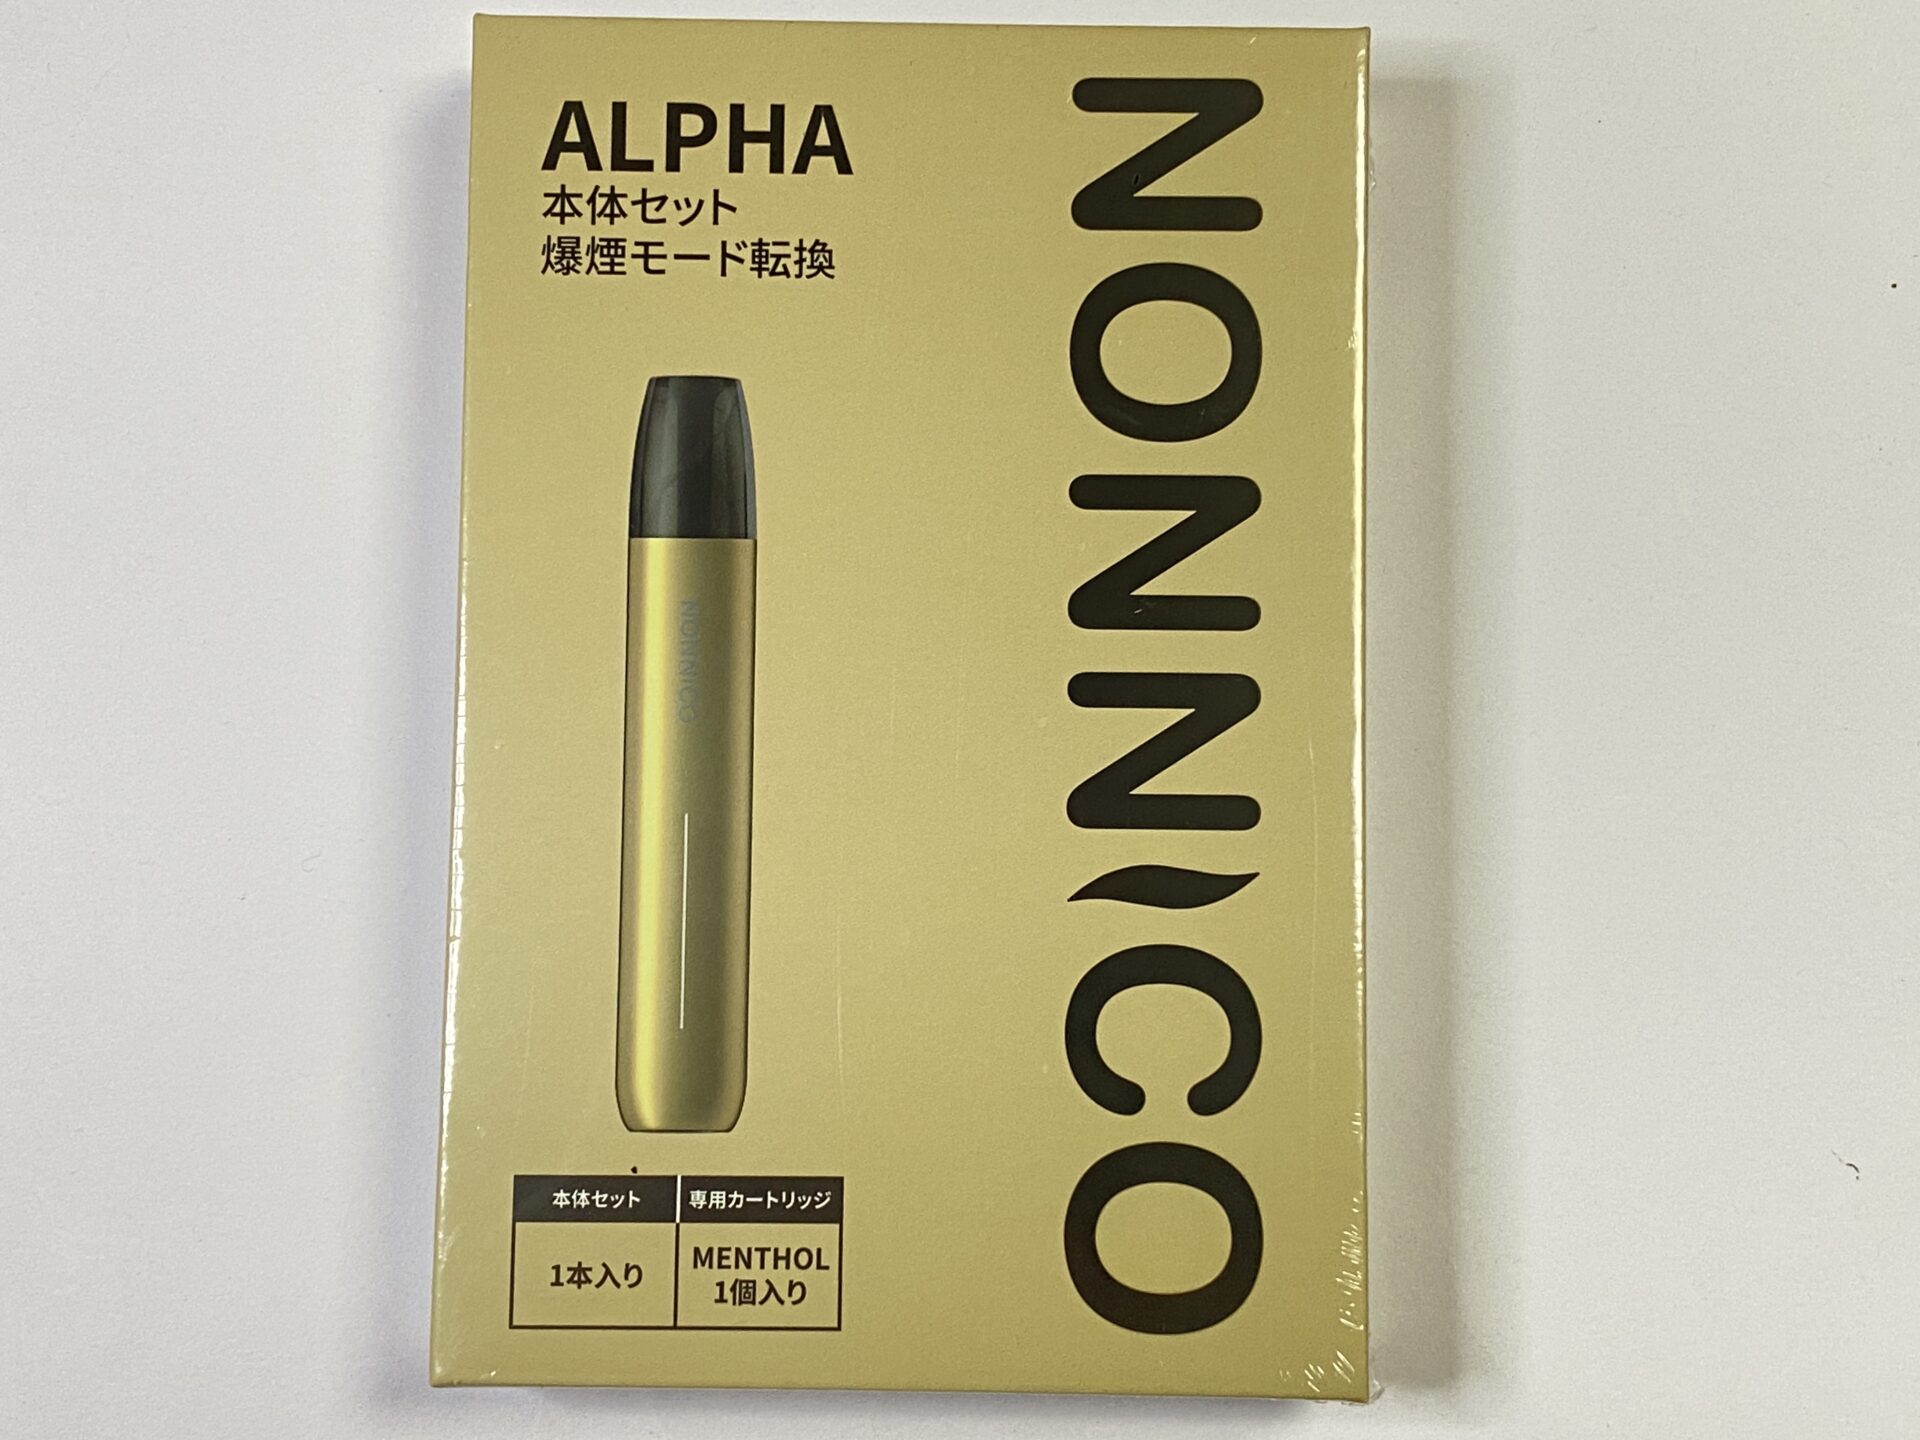 【NONNICO】NONNICO Alpha POD型電子ベイプを吸ってみて分かったレビュー